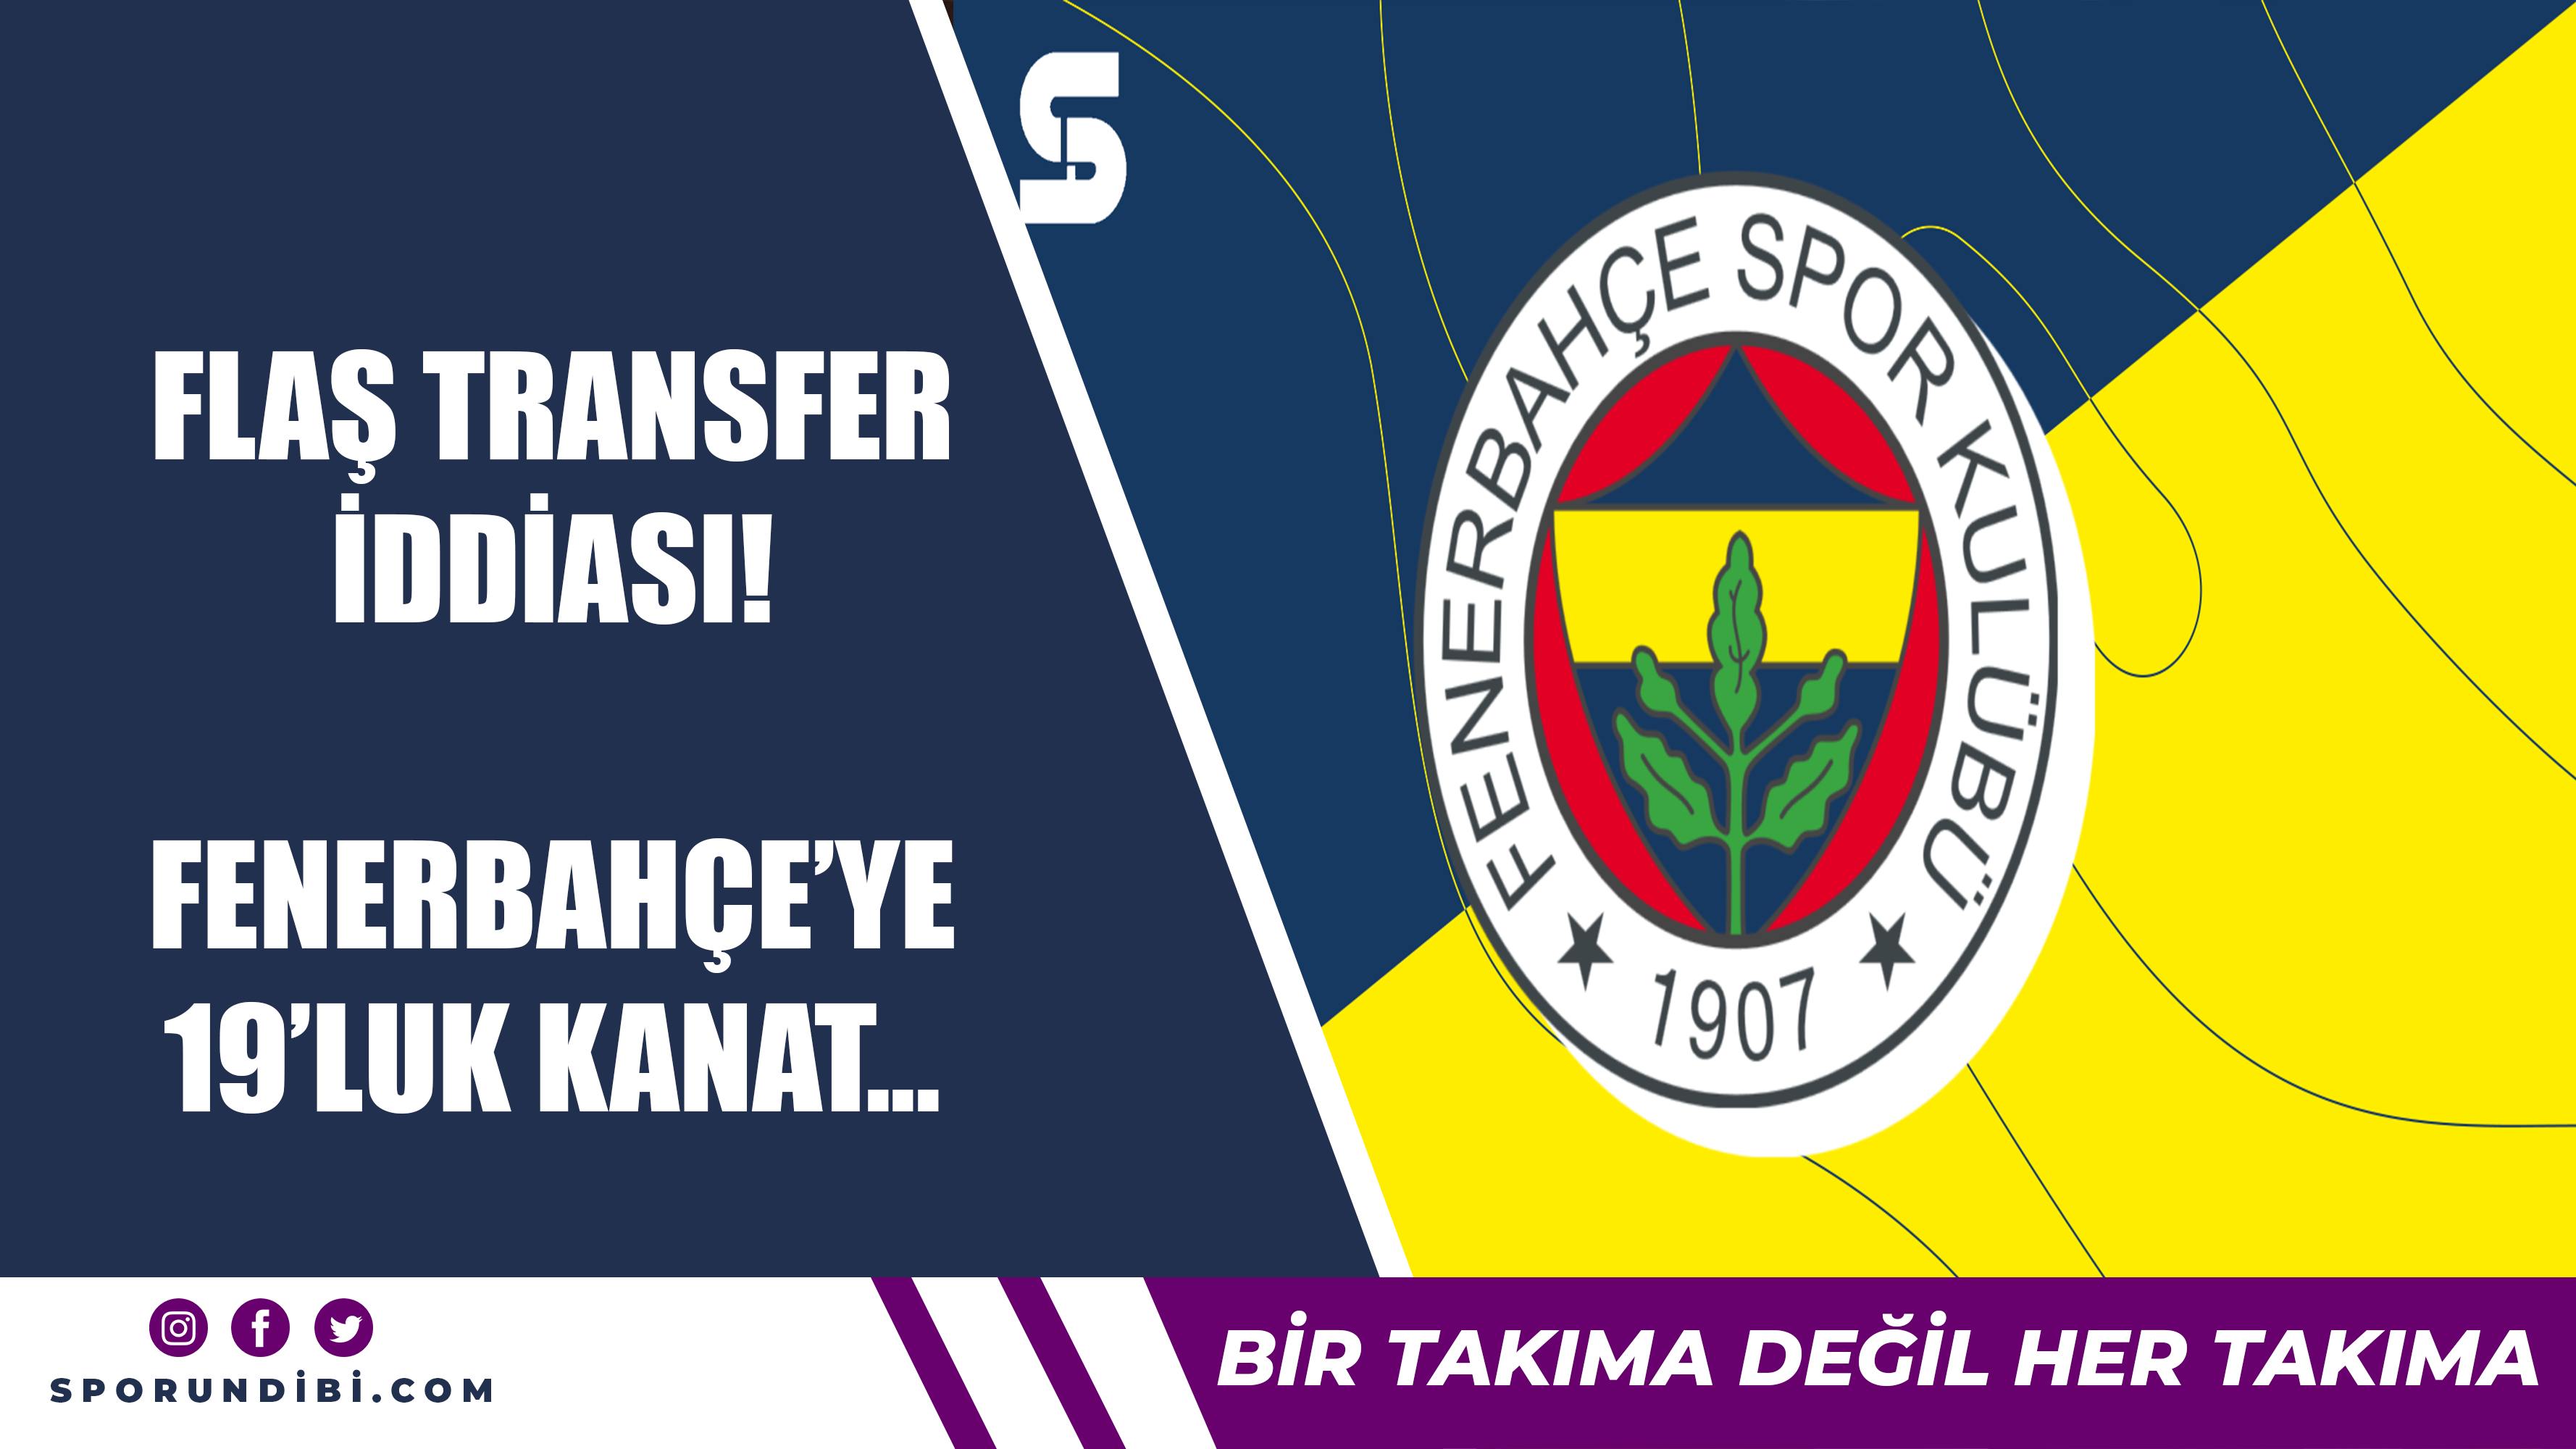 Flaş transfer iddiası! Fenerbahçe'ye 19'luk kanat...